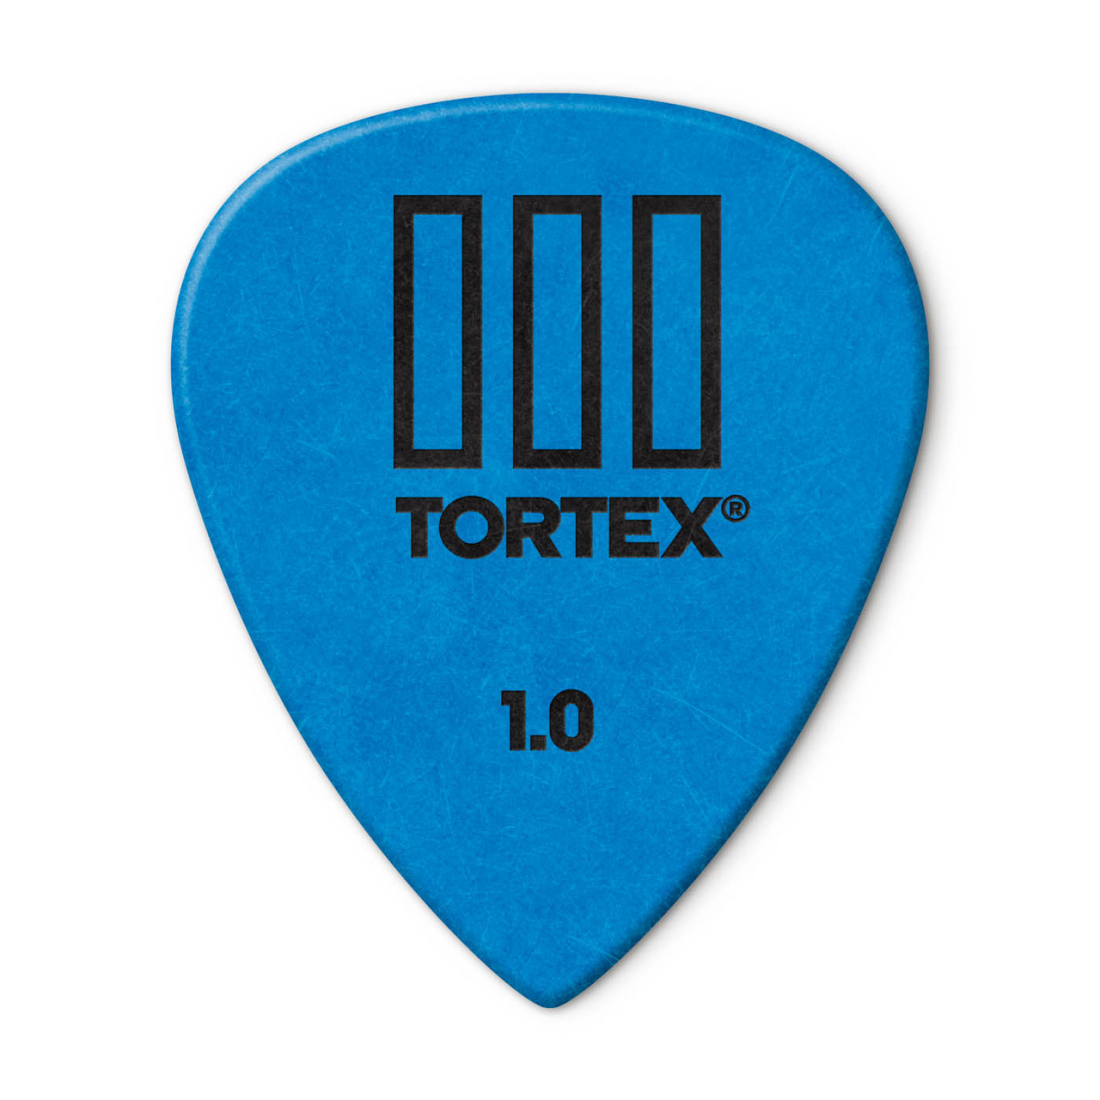 Tortex III Player Pack (12 Pack) - 1.0mm